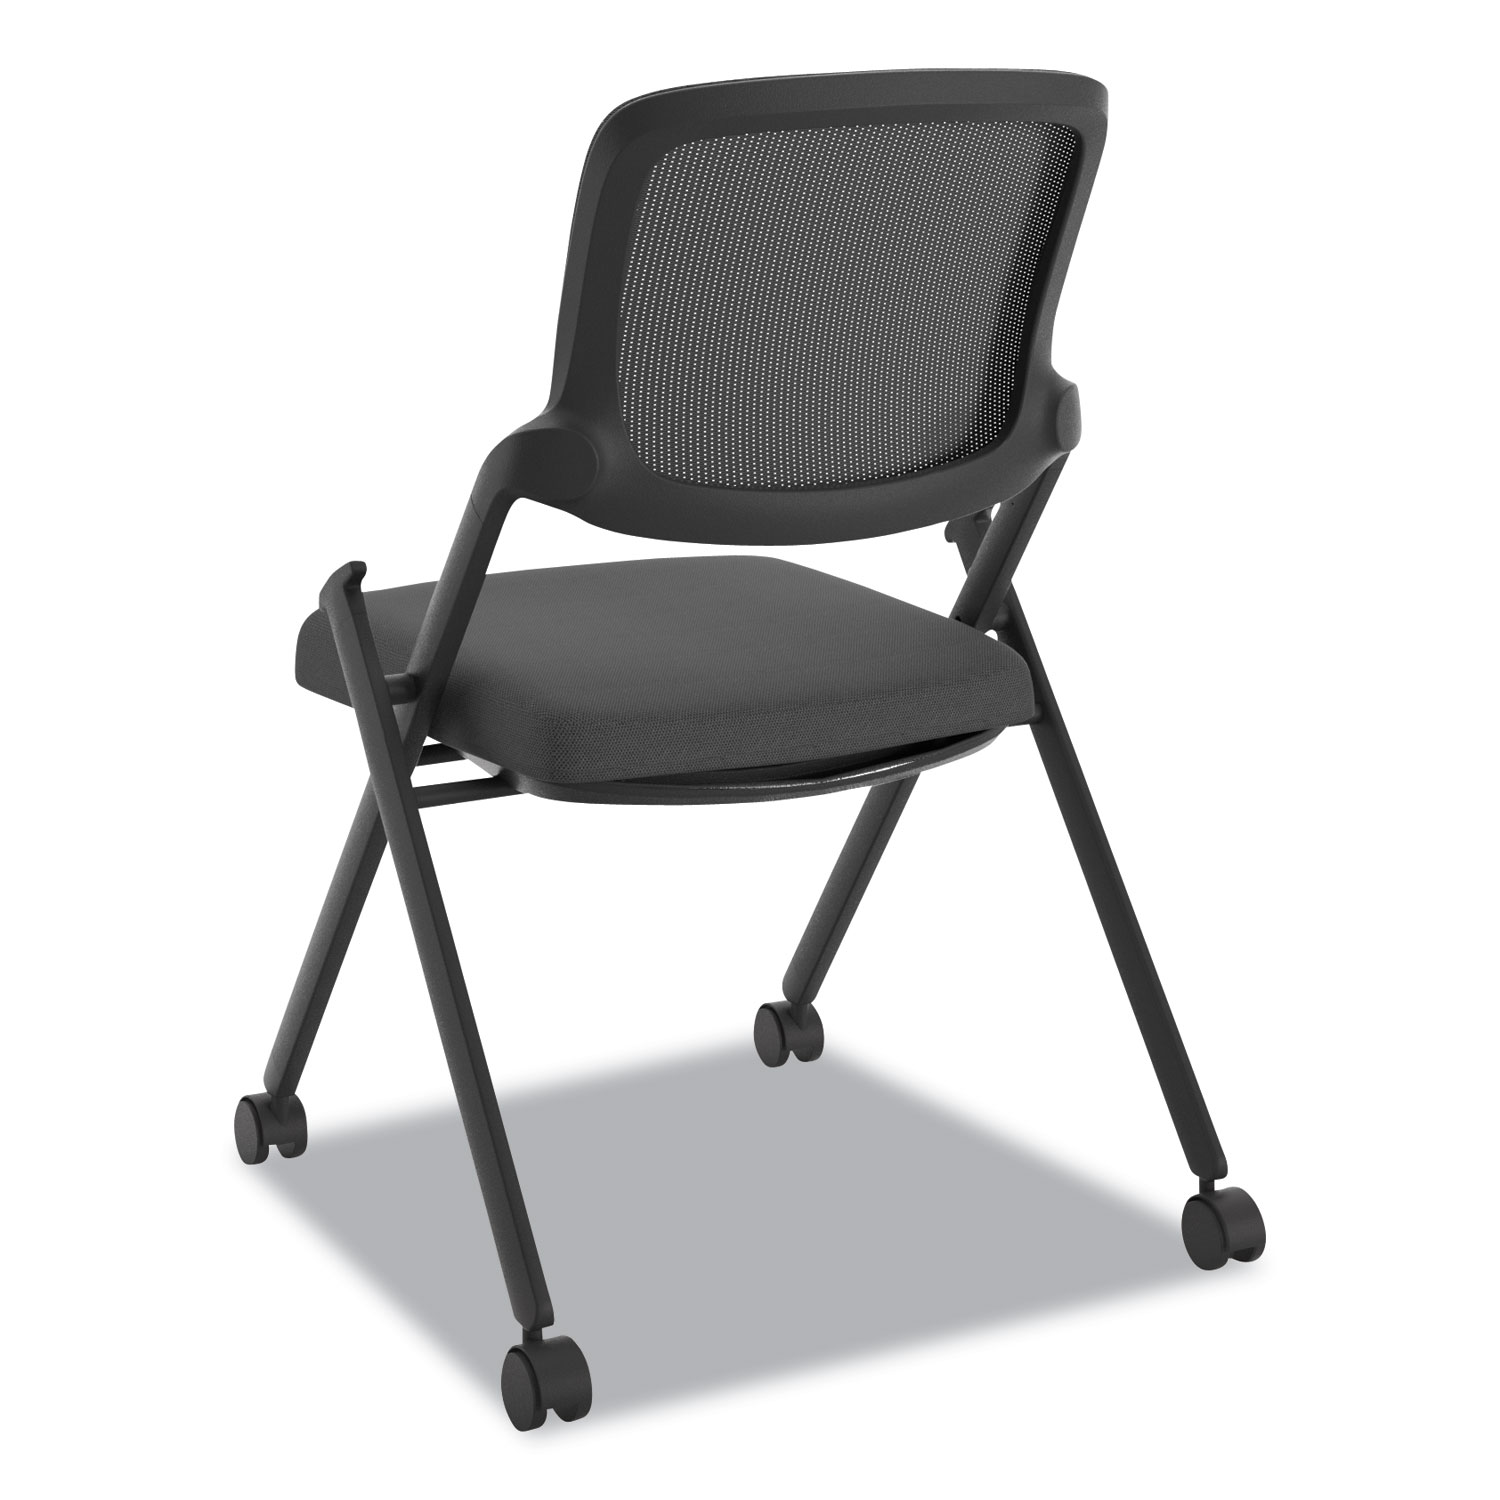 VL304 Mesh Back Nesting Chair, Black Seat/Black Back, Black Base